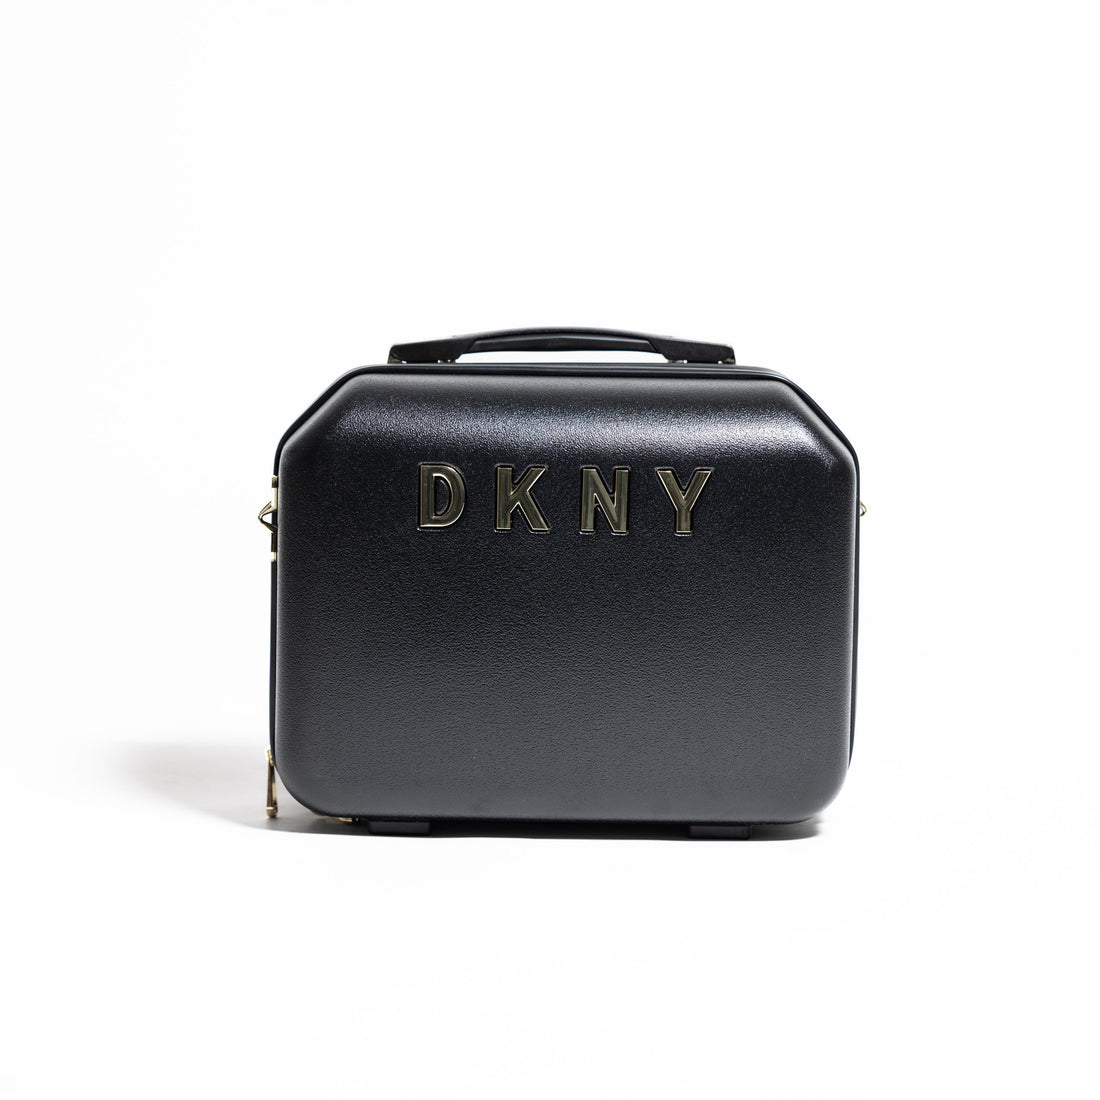 DKNY Black Beauty case_DH060ML0_BLK_01